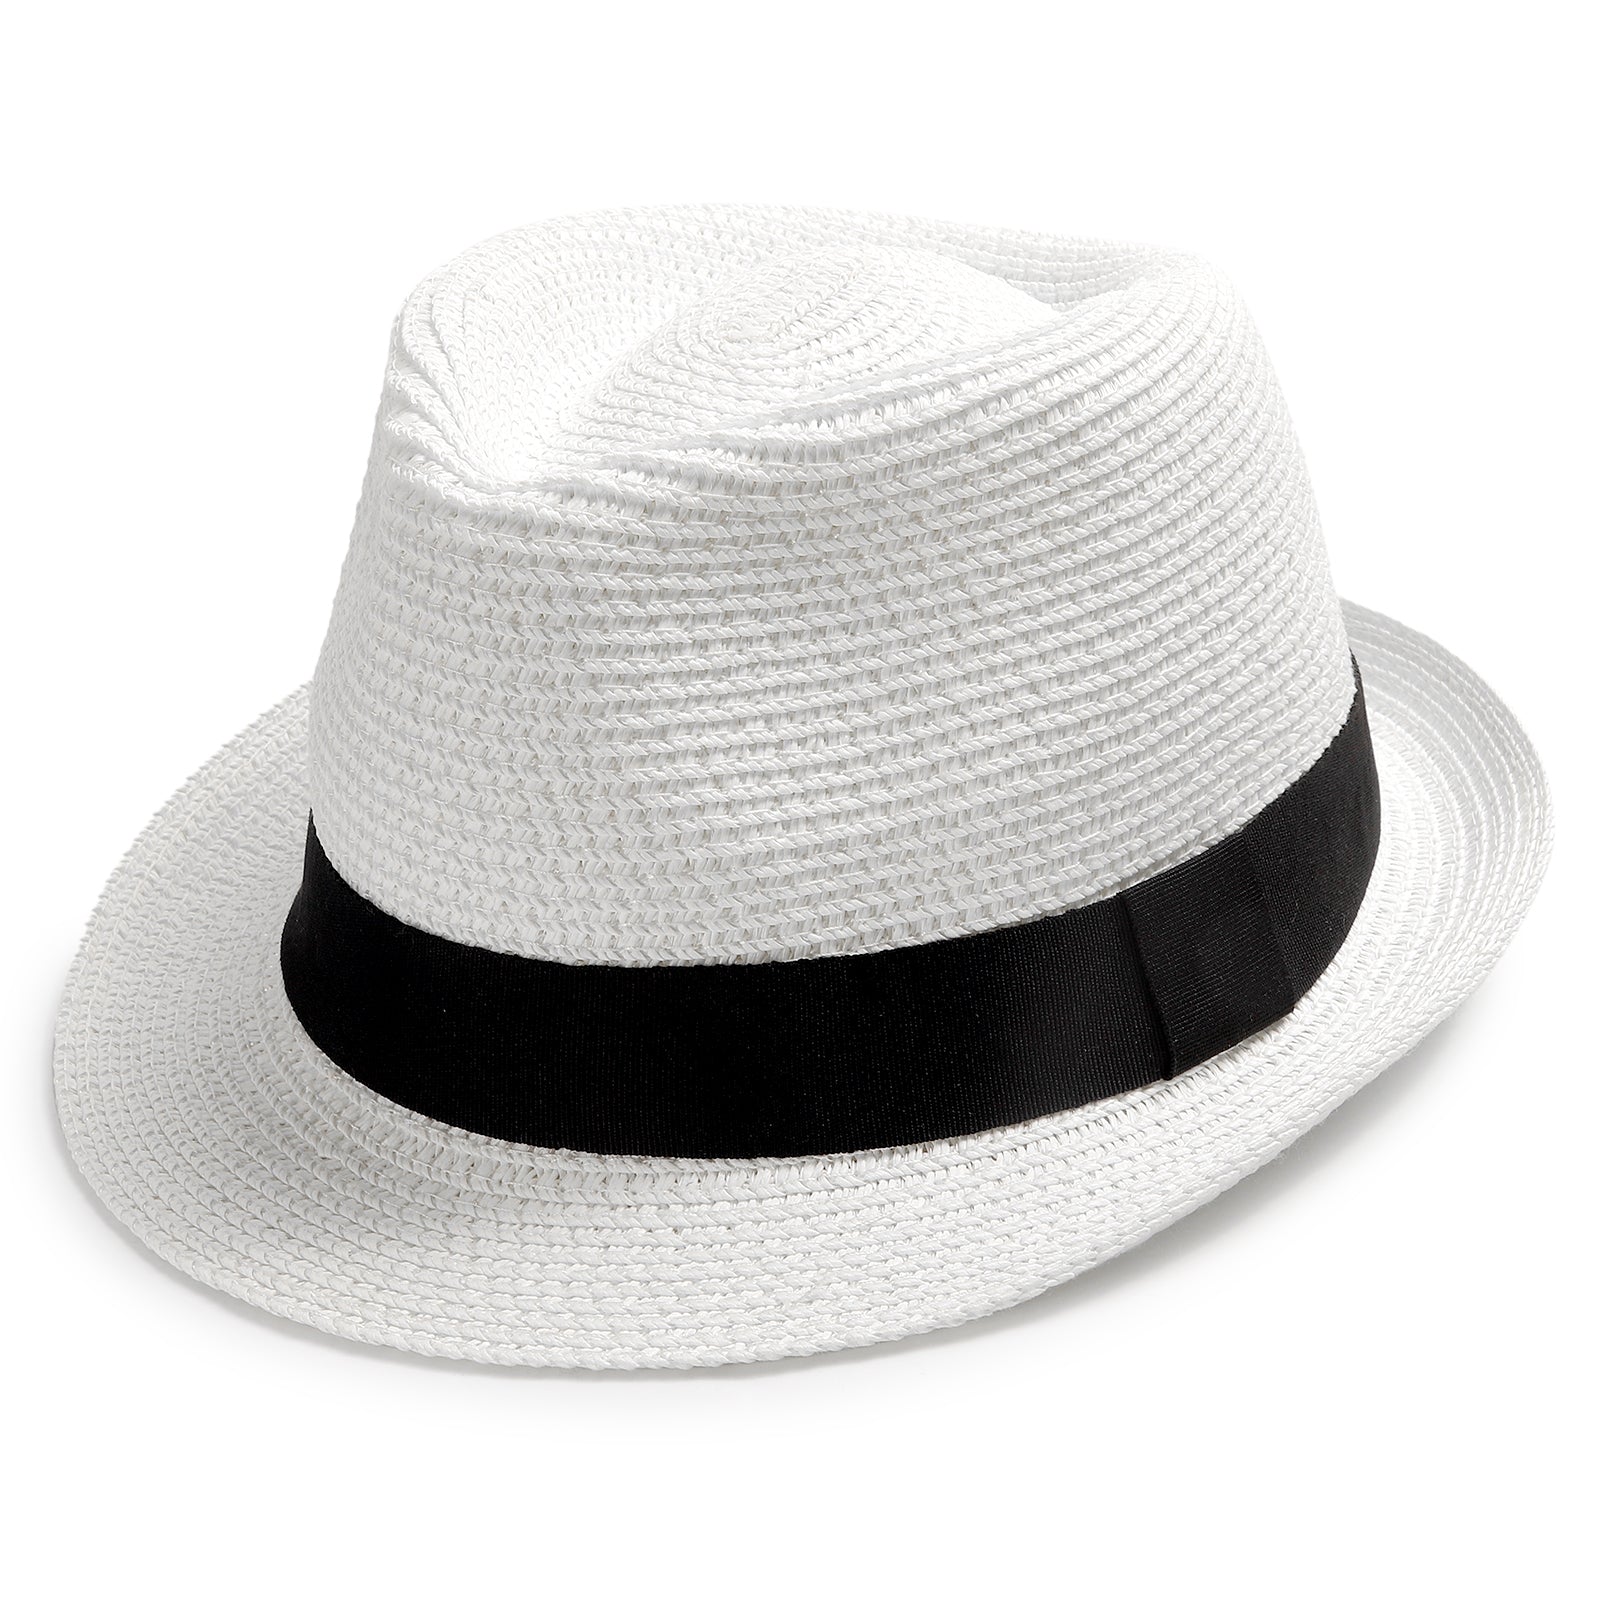 Women's Men's Straw Hat Short Brim Panama Fedora Beach Sun Trilby